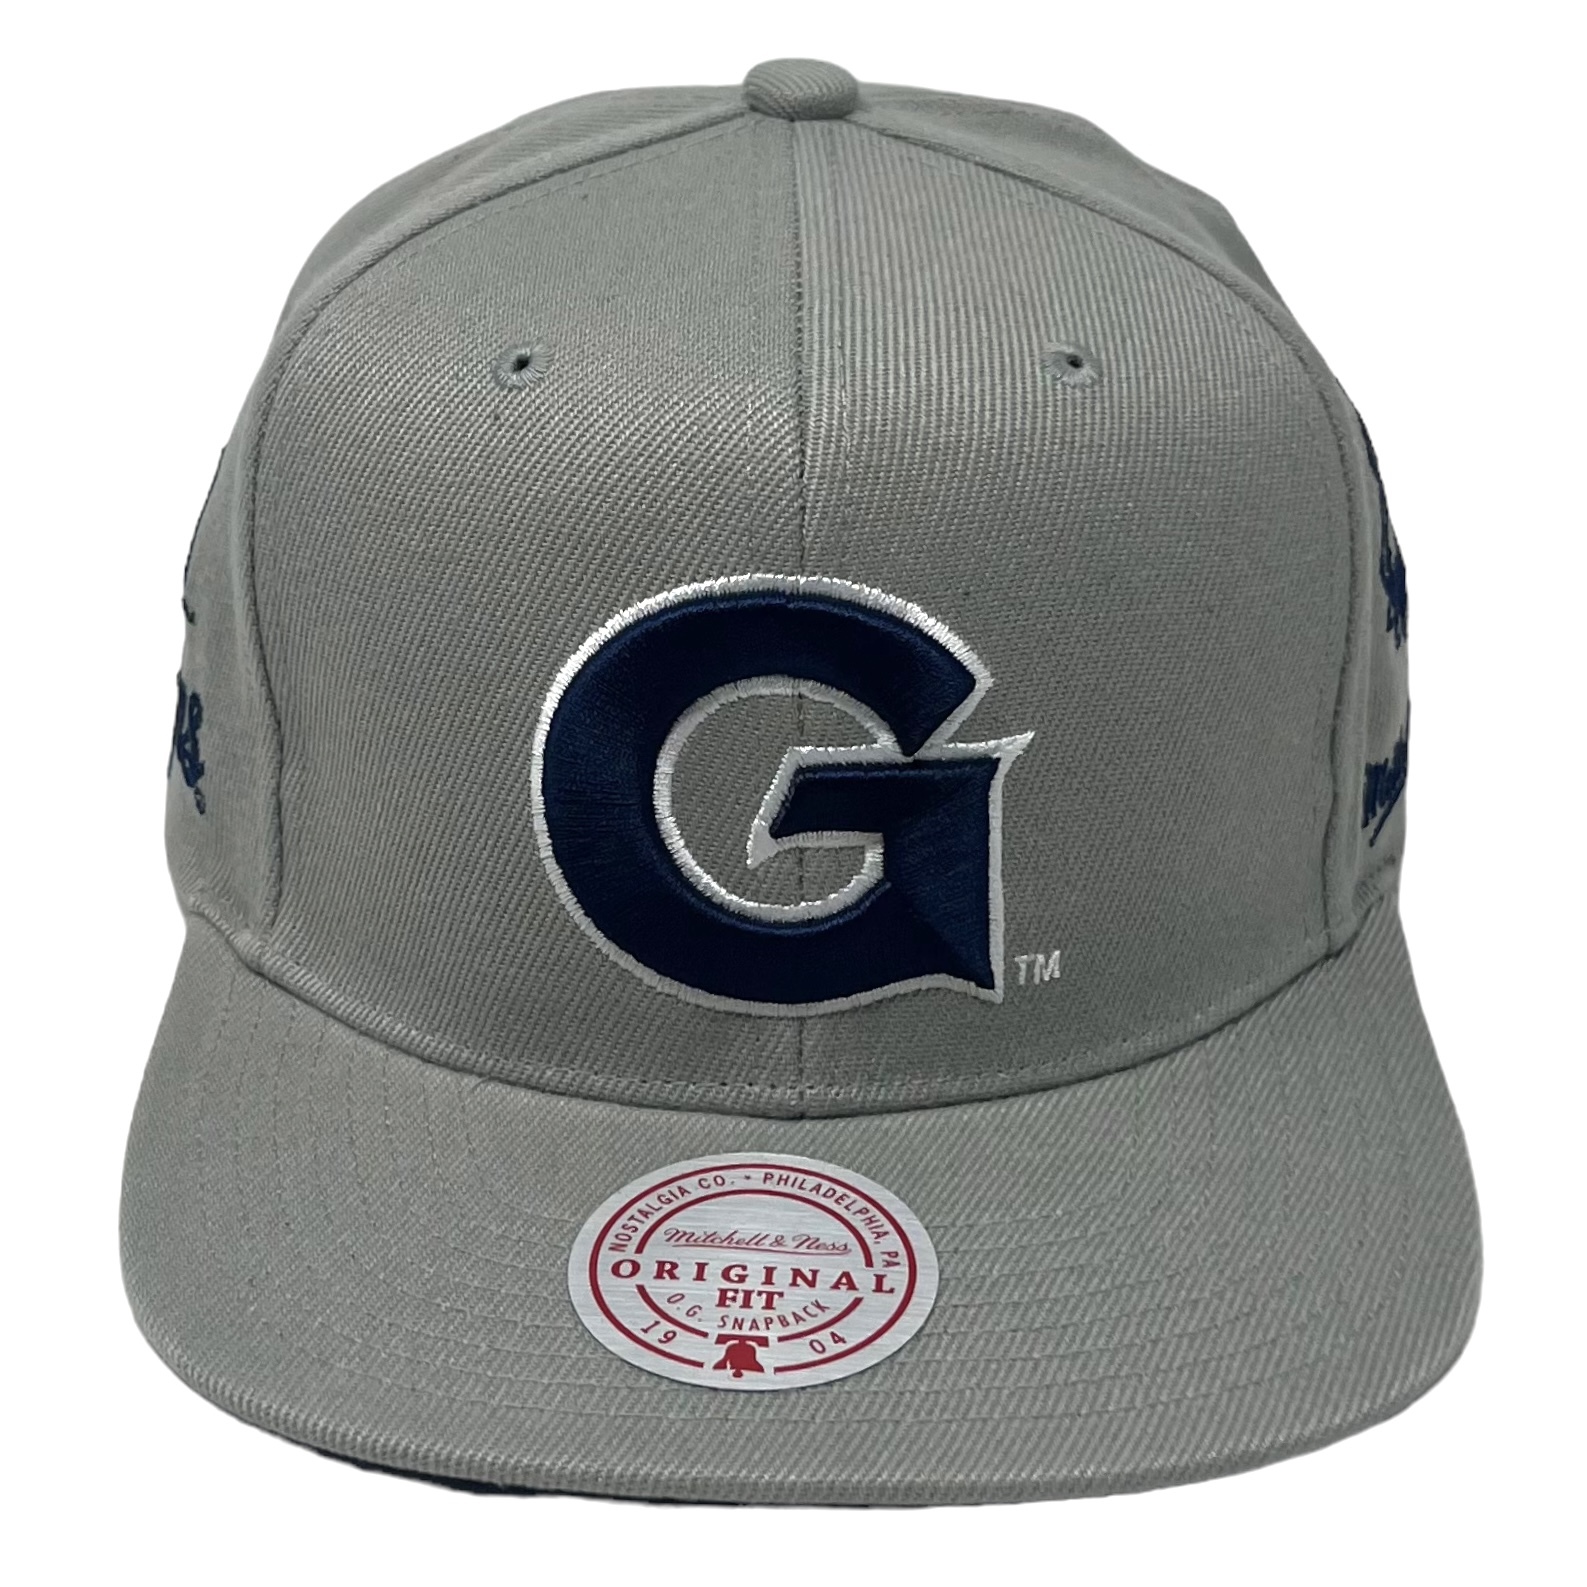 Youth Mitchell & Ness Navy Georgetown Hoyas Varsity Letter Snapback Hat